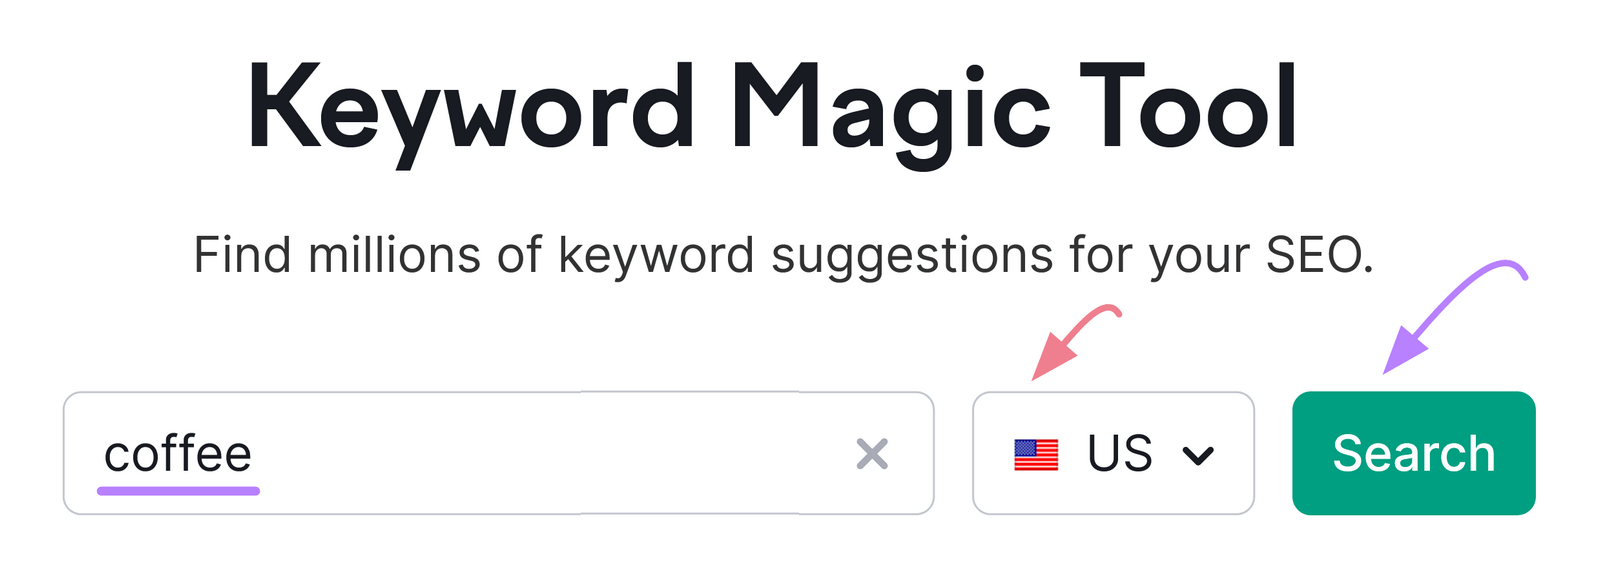 screenshot of Keyword Magic Tool search bar